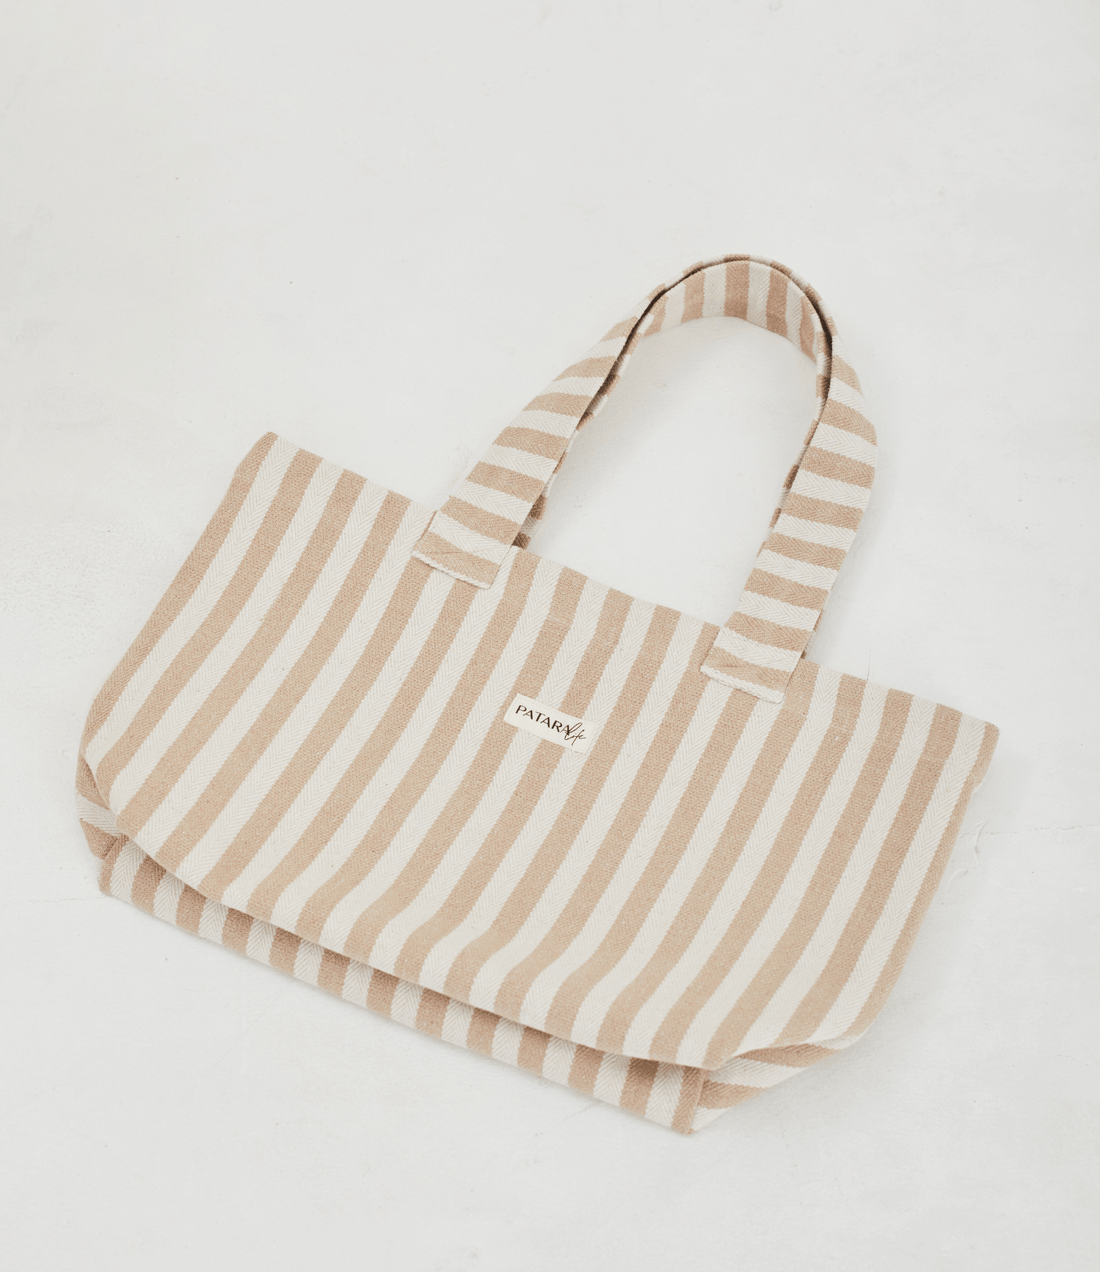 Herringbone woven linen tote bag in Light Brown stripe layed flat on floor